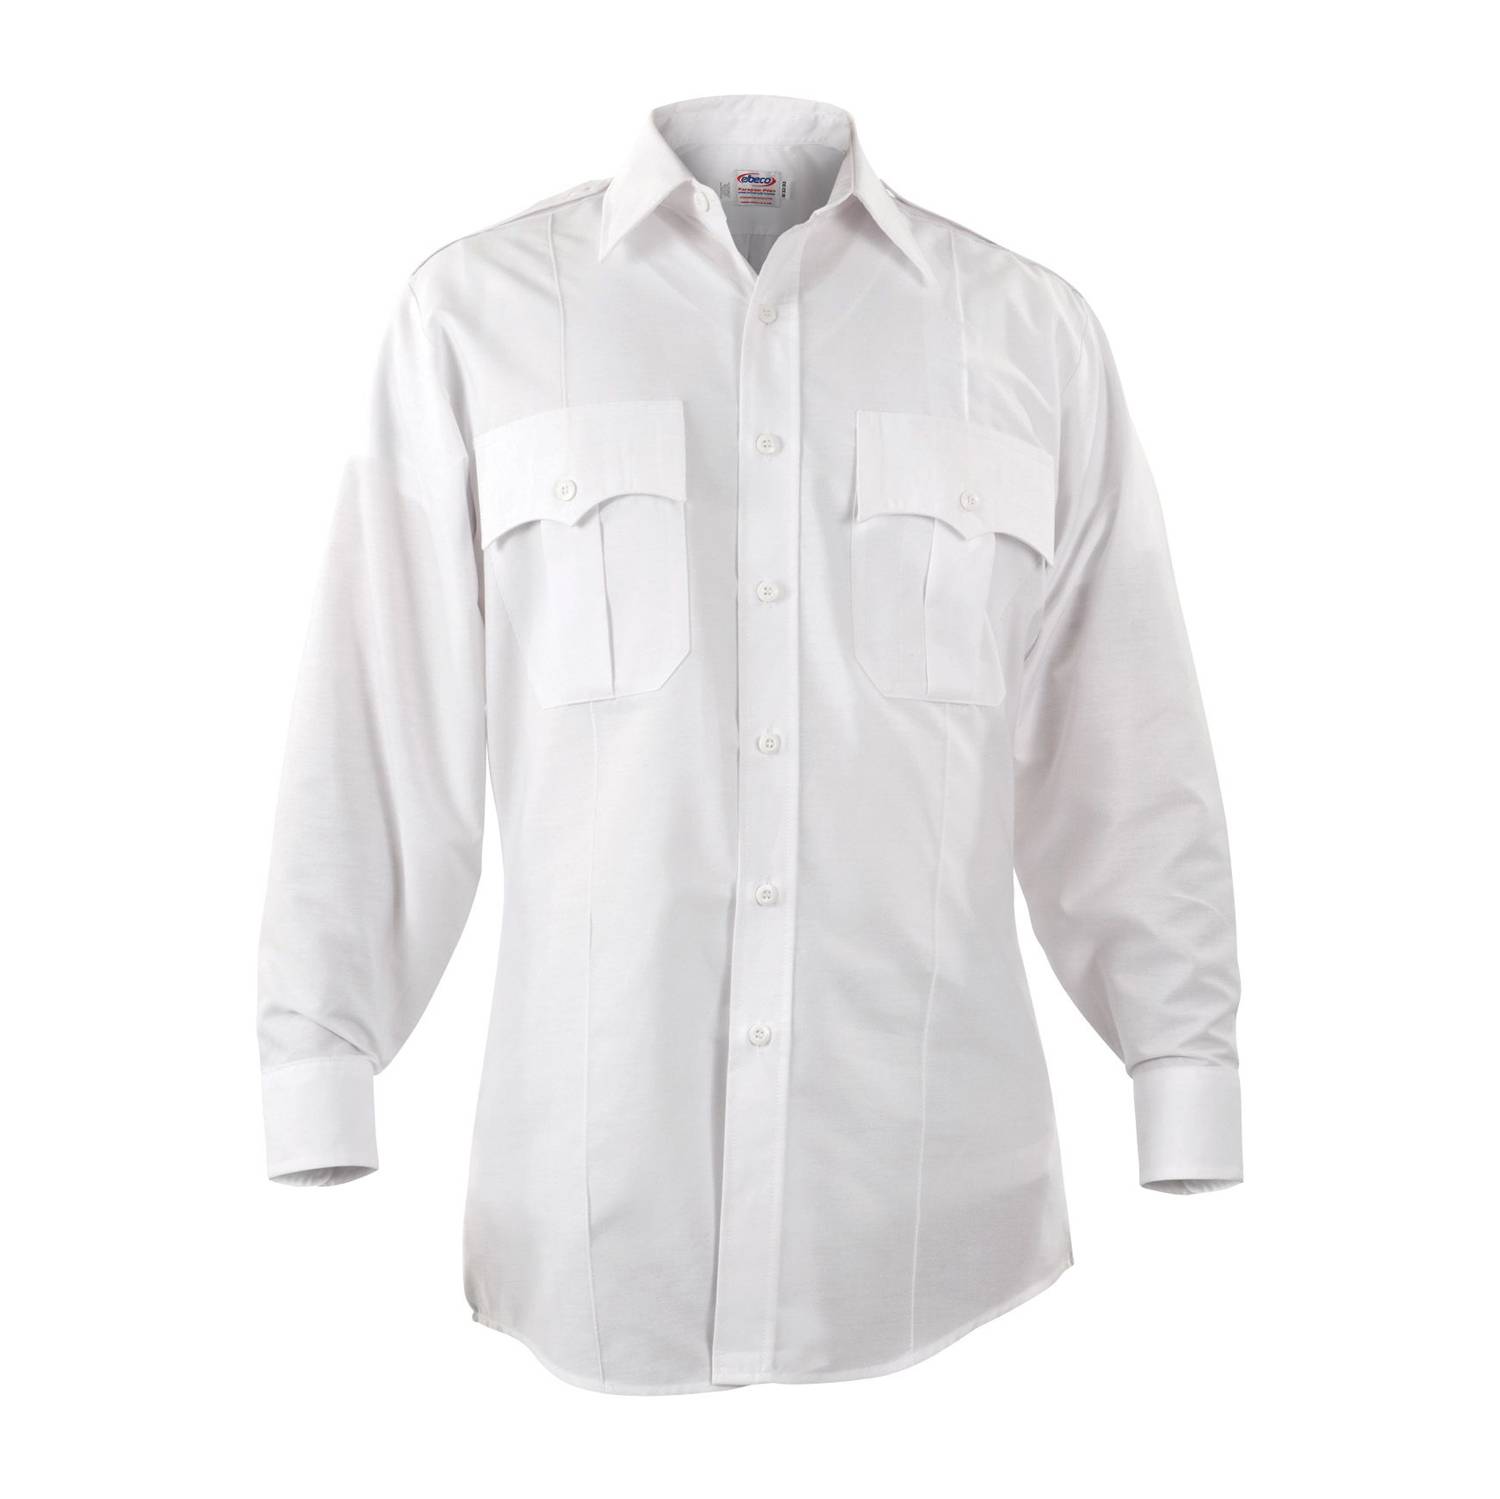 Elbeco Response Paragon Plus Long Sleeve Poly Cotton Shirt